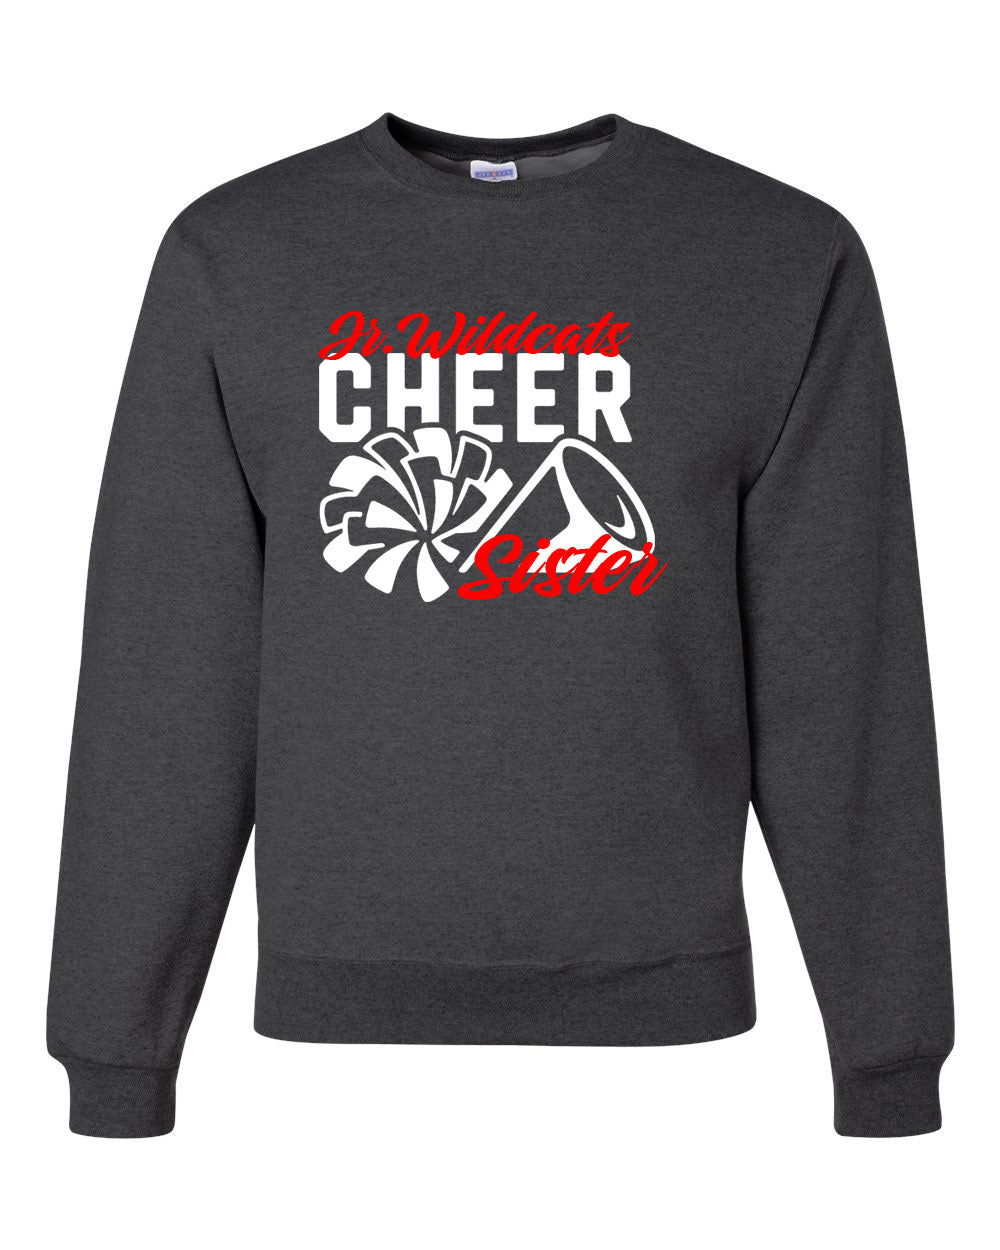 High Point Cheer Design 4 non hooded sweatshirt